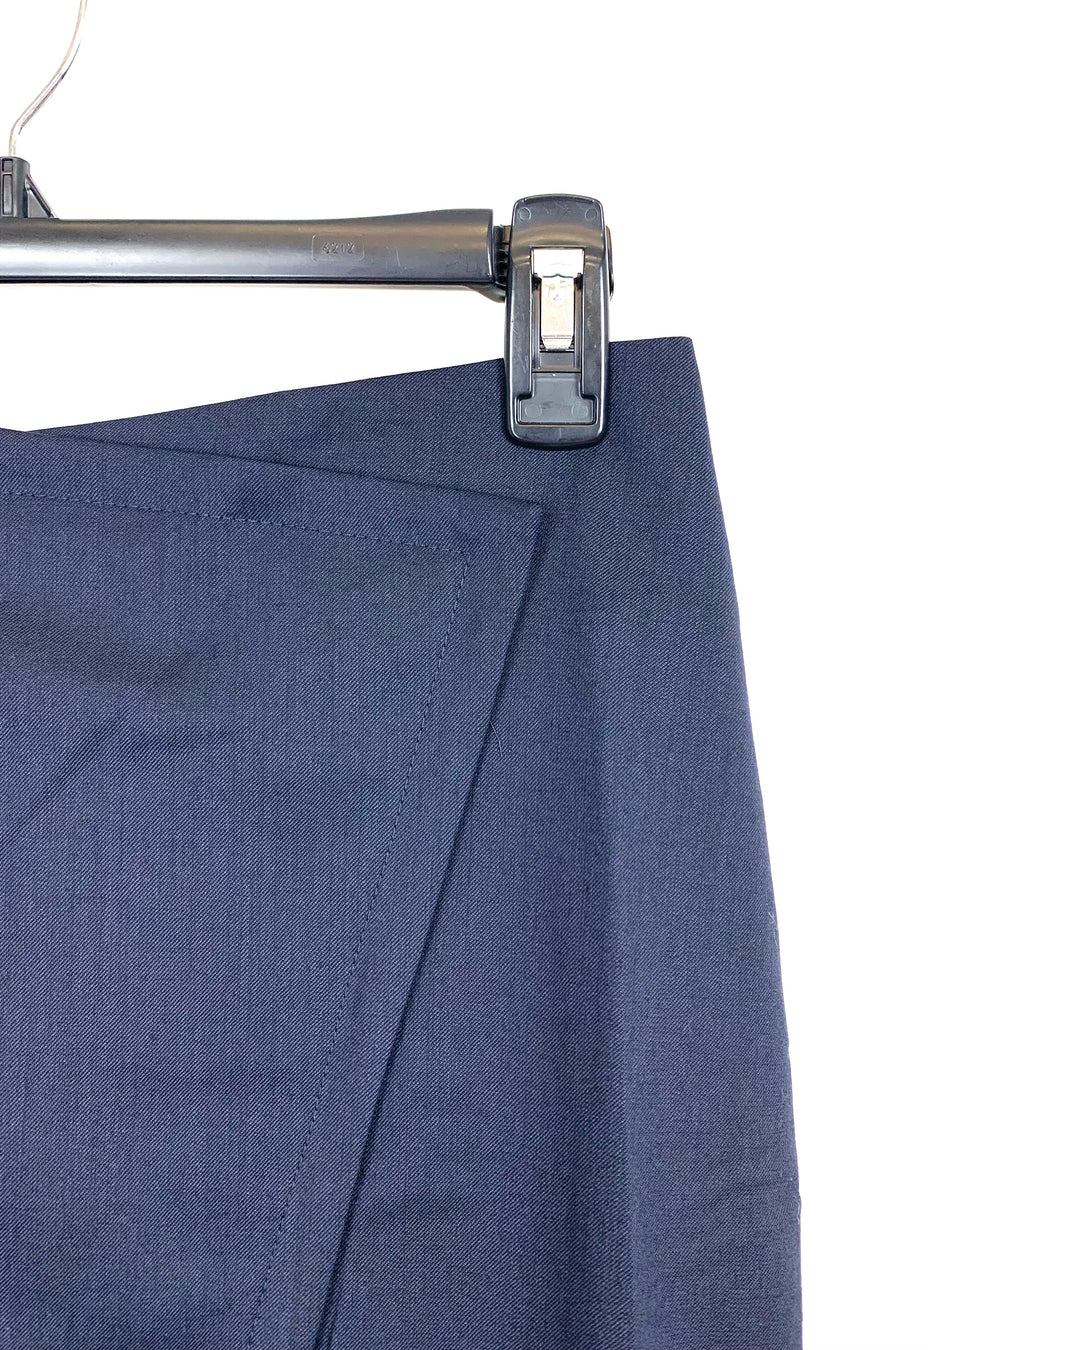 Navy Blue Midi Skirt - Size 4